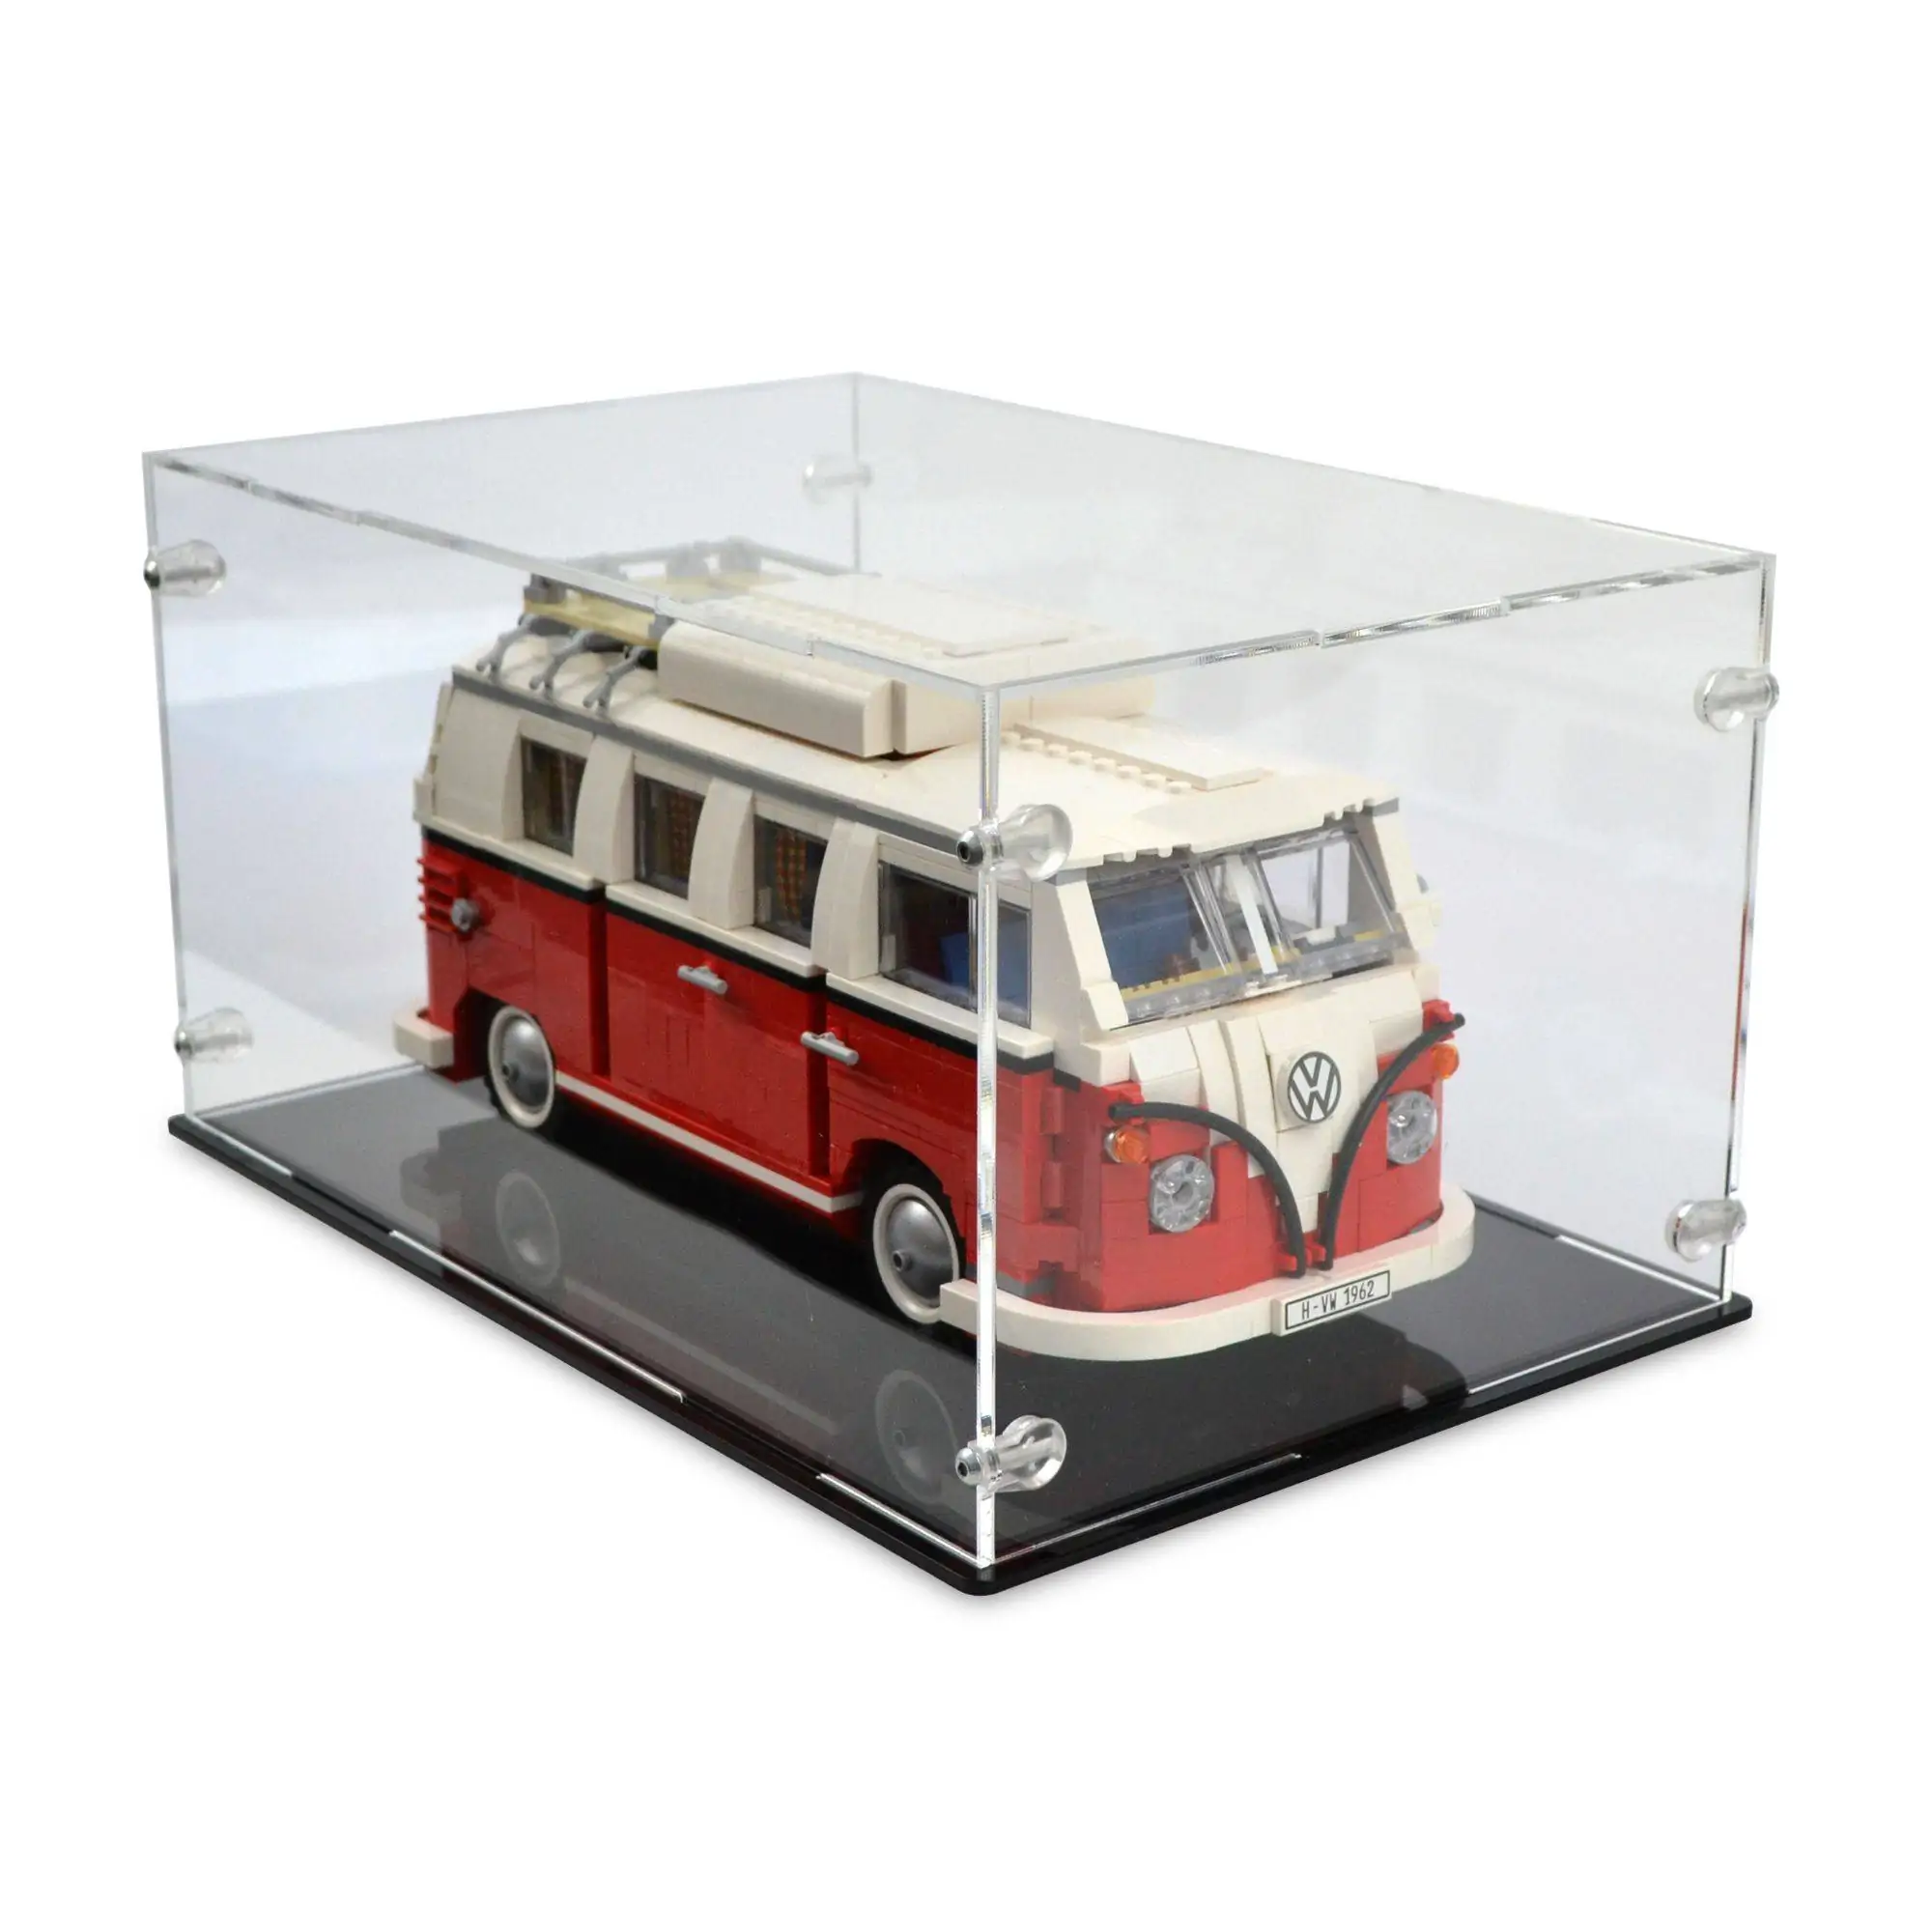 Acrylic Display for LEGO Camper | iDisplayit